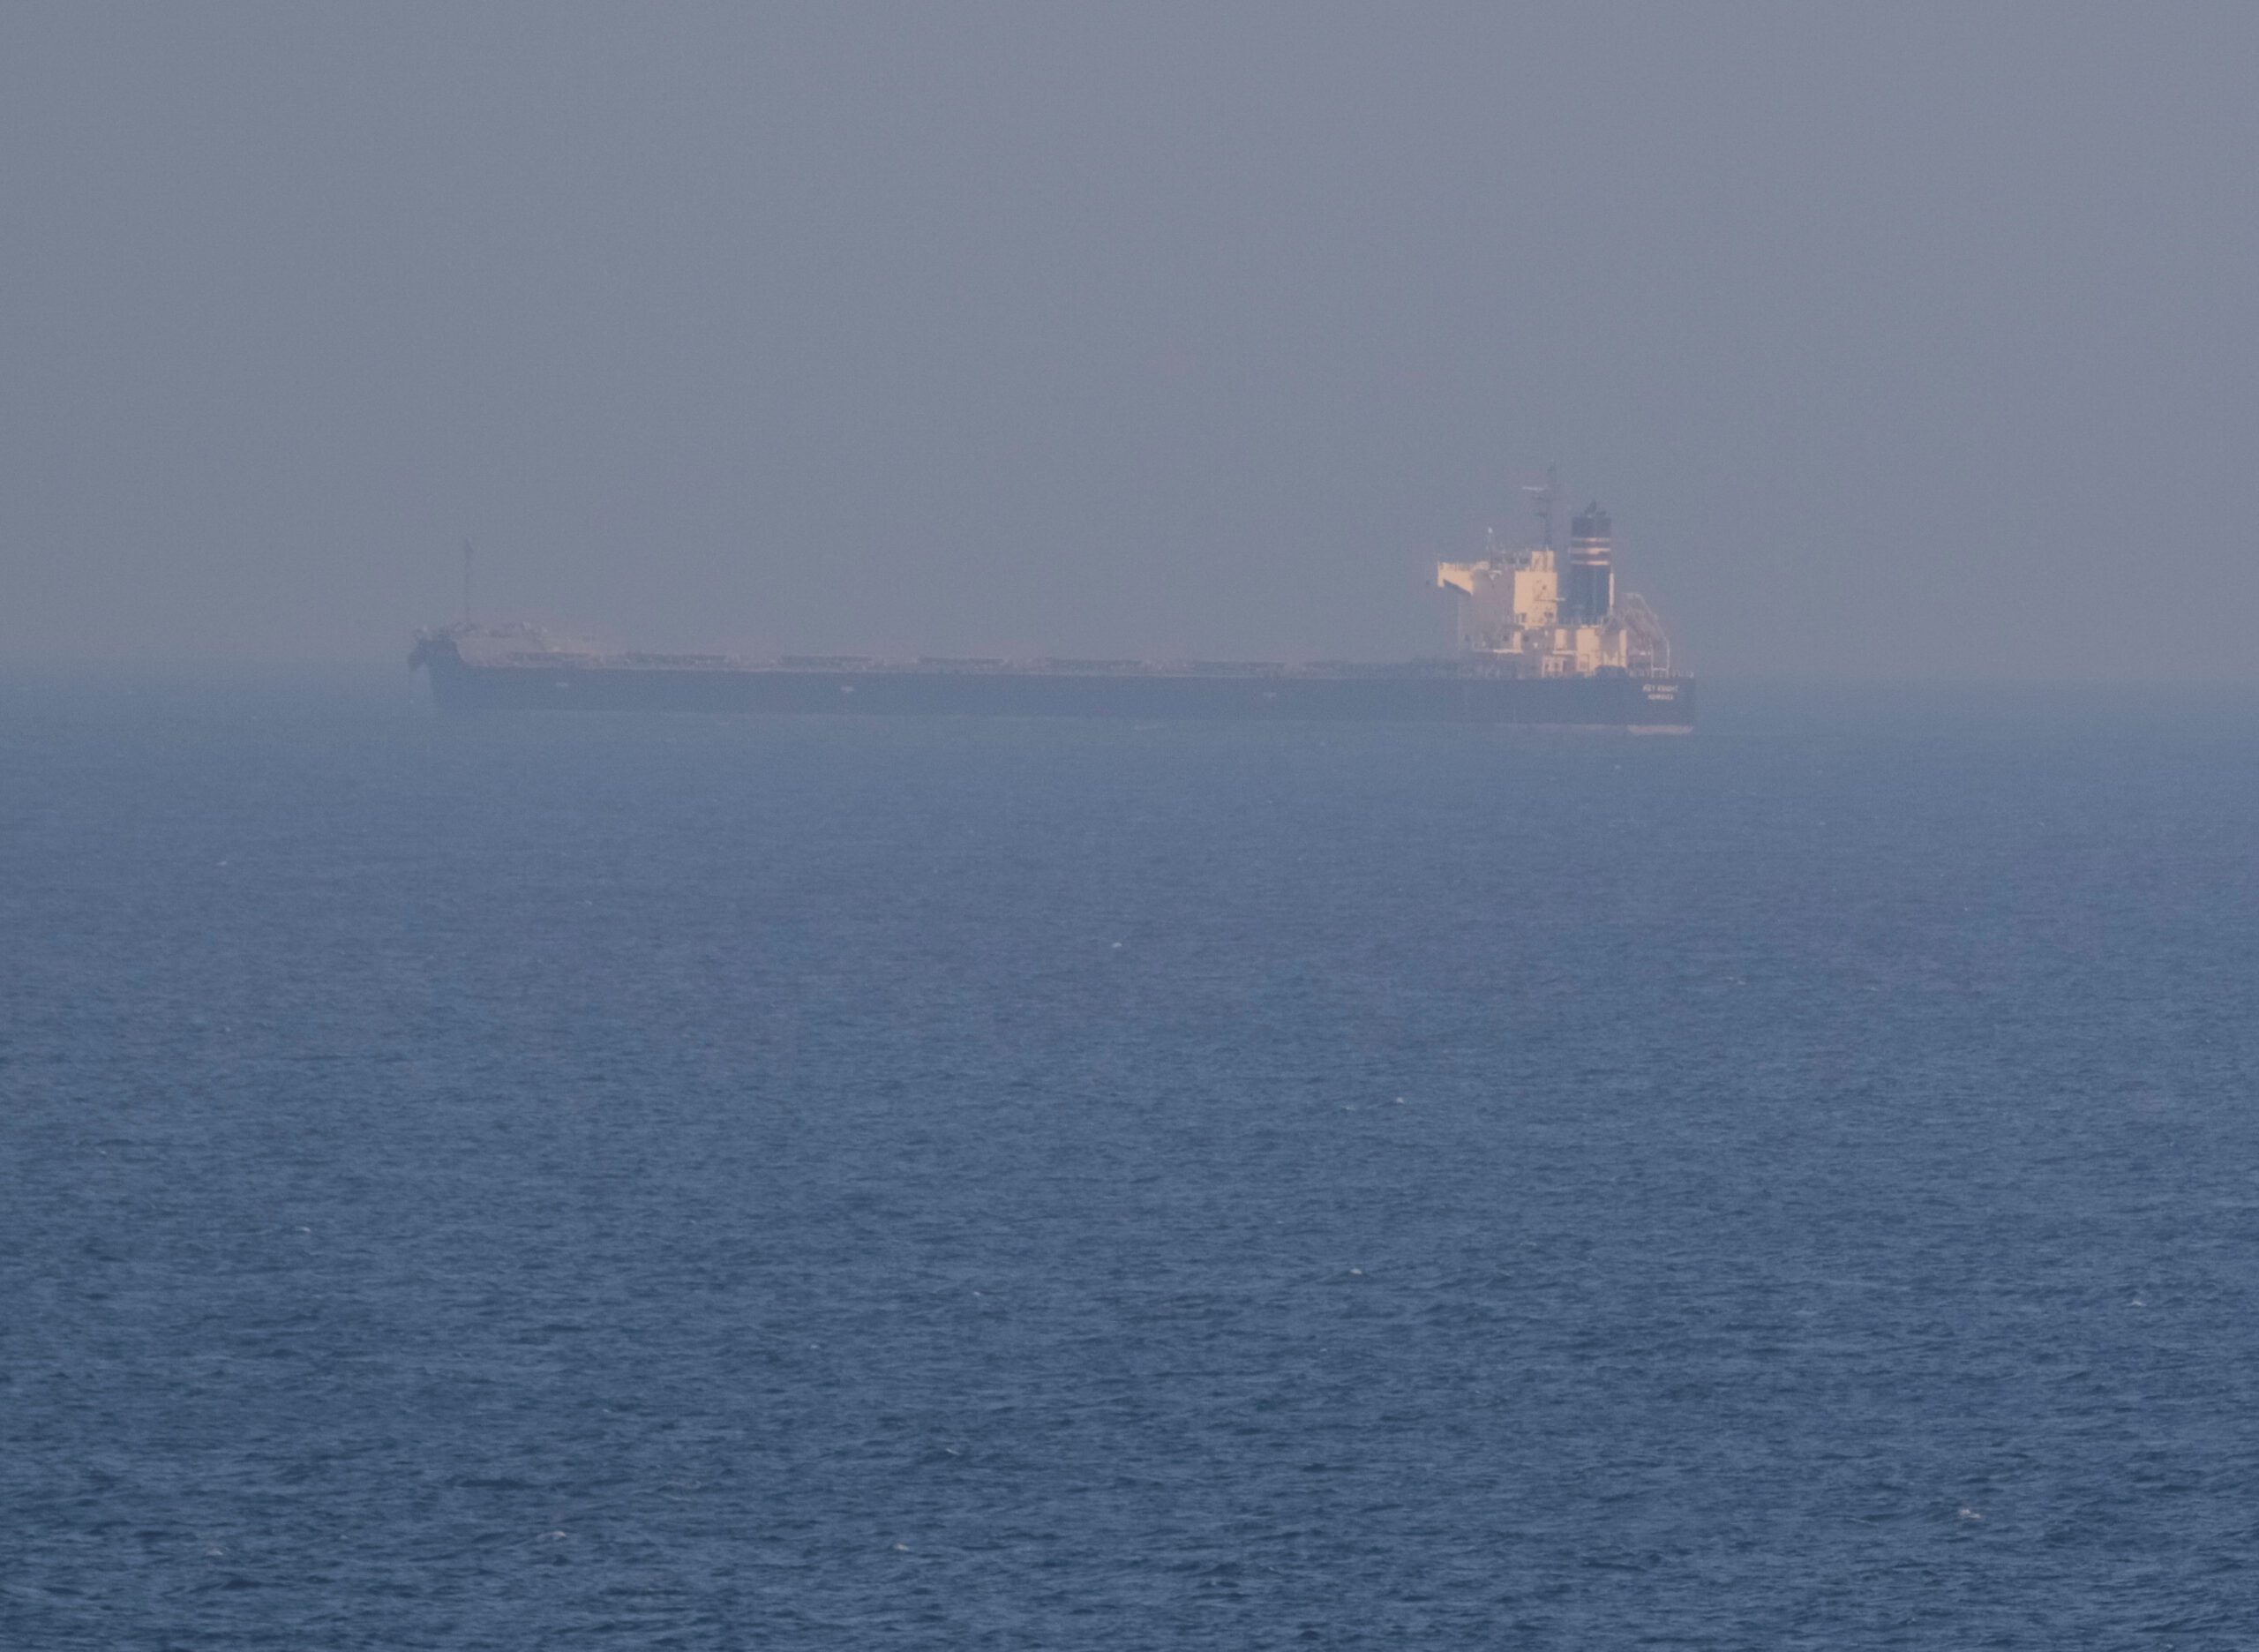 A grain ship carrying Ukrainian grain is seen in the Black Sea. Photo by Serhii Smolientsev